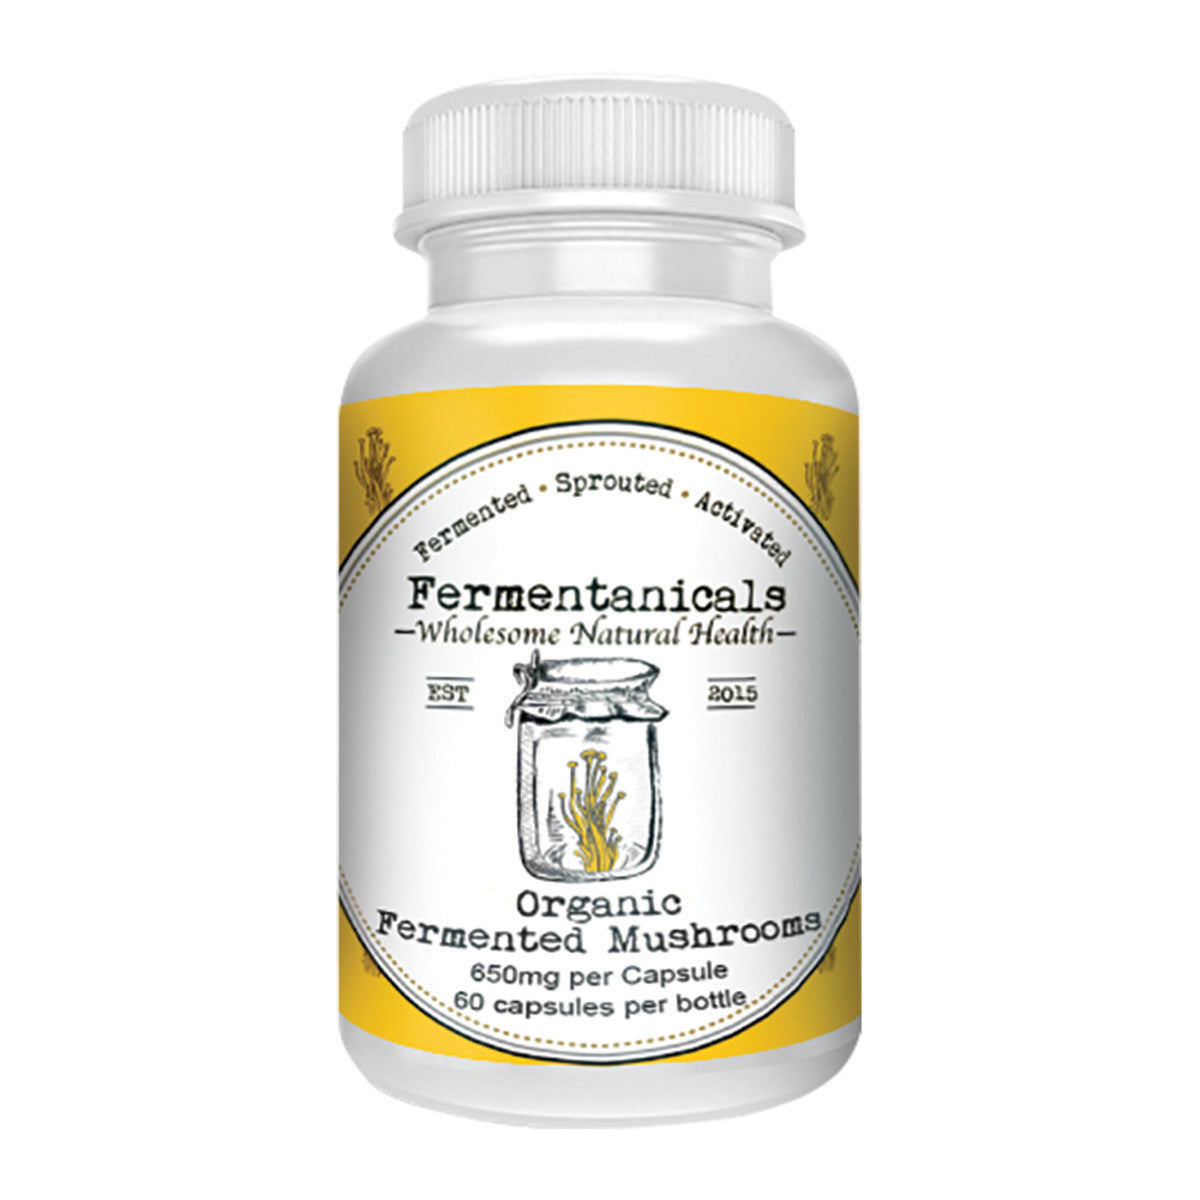 Fermentanicals - Organic Fermented Mushrooms